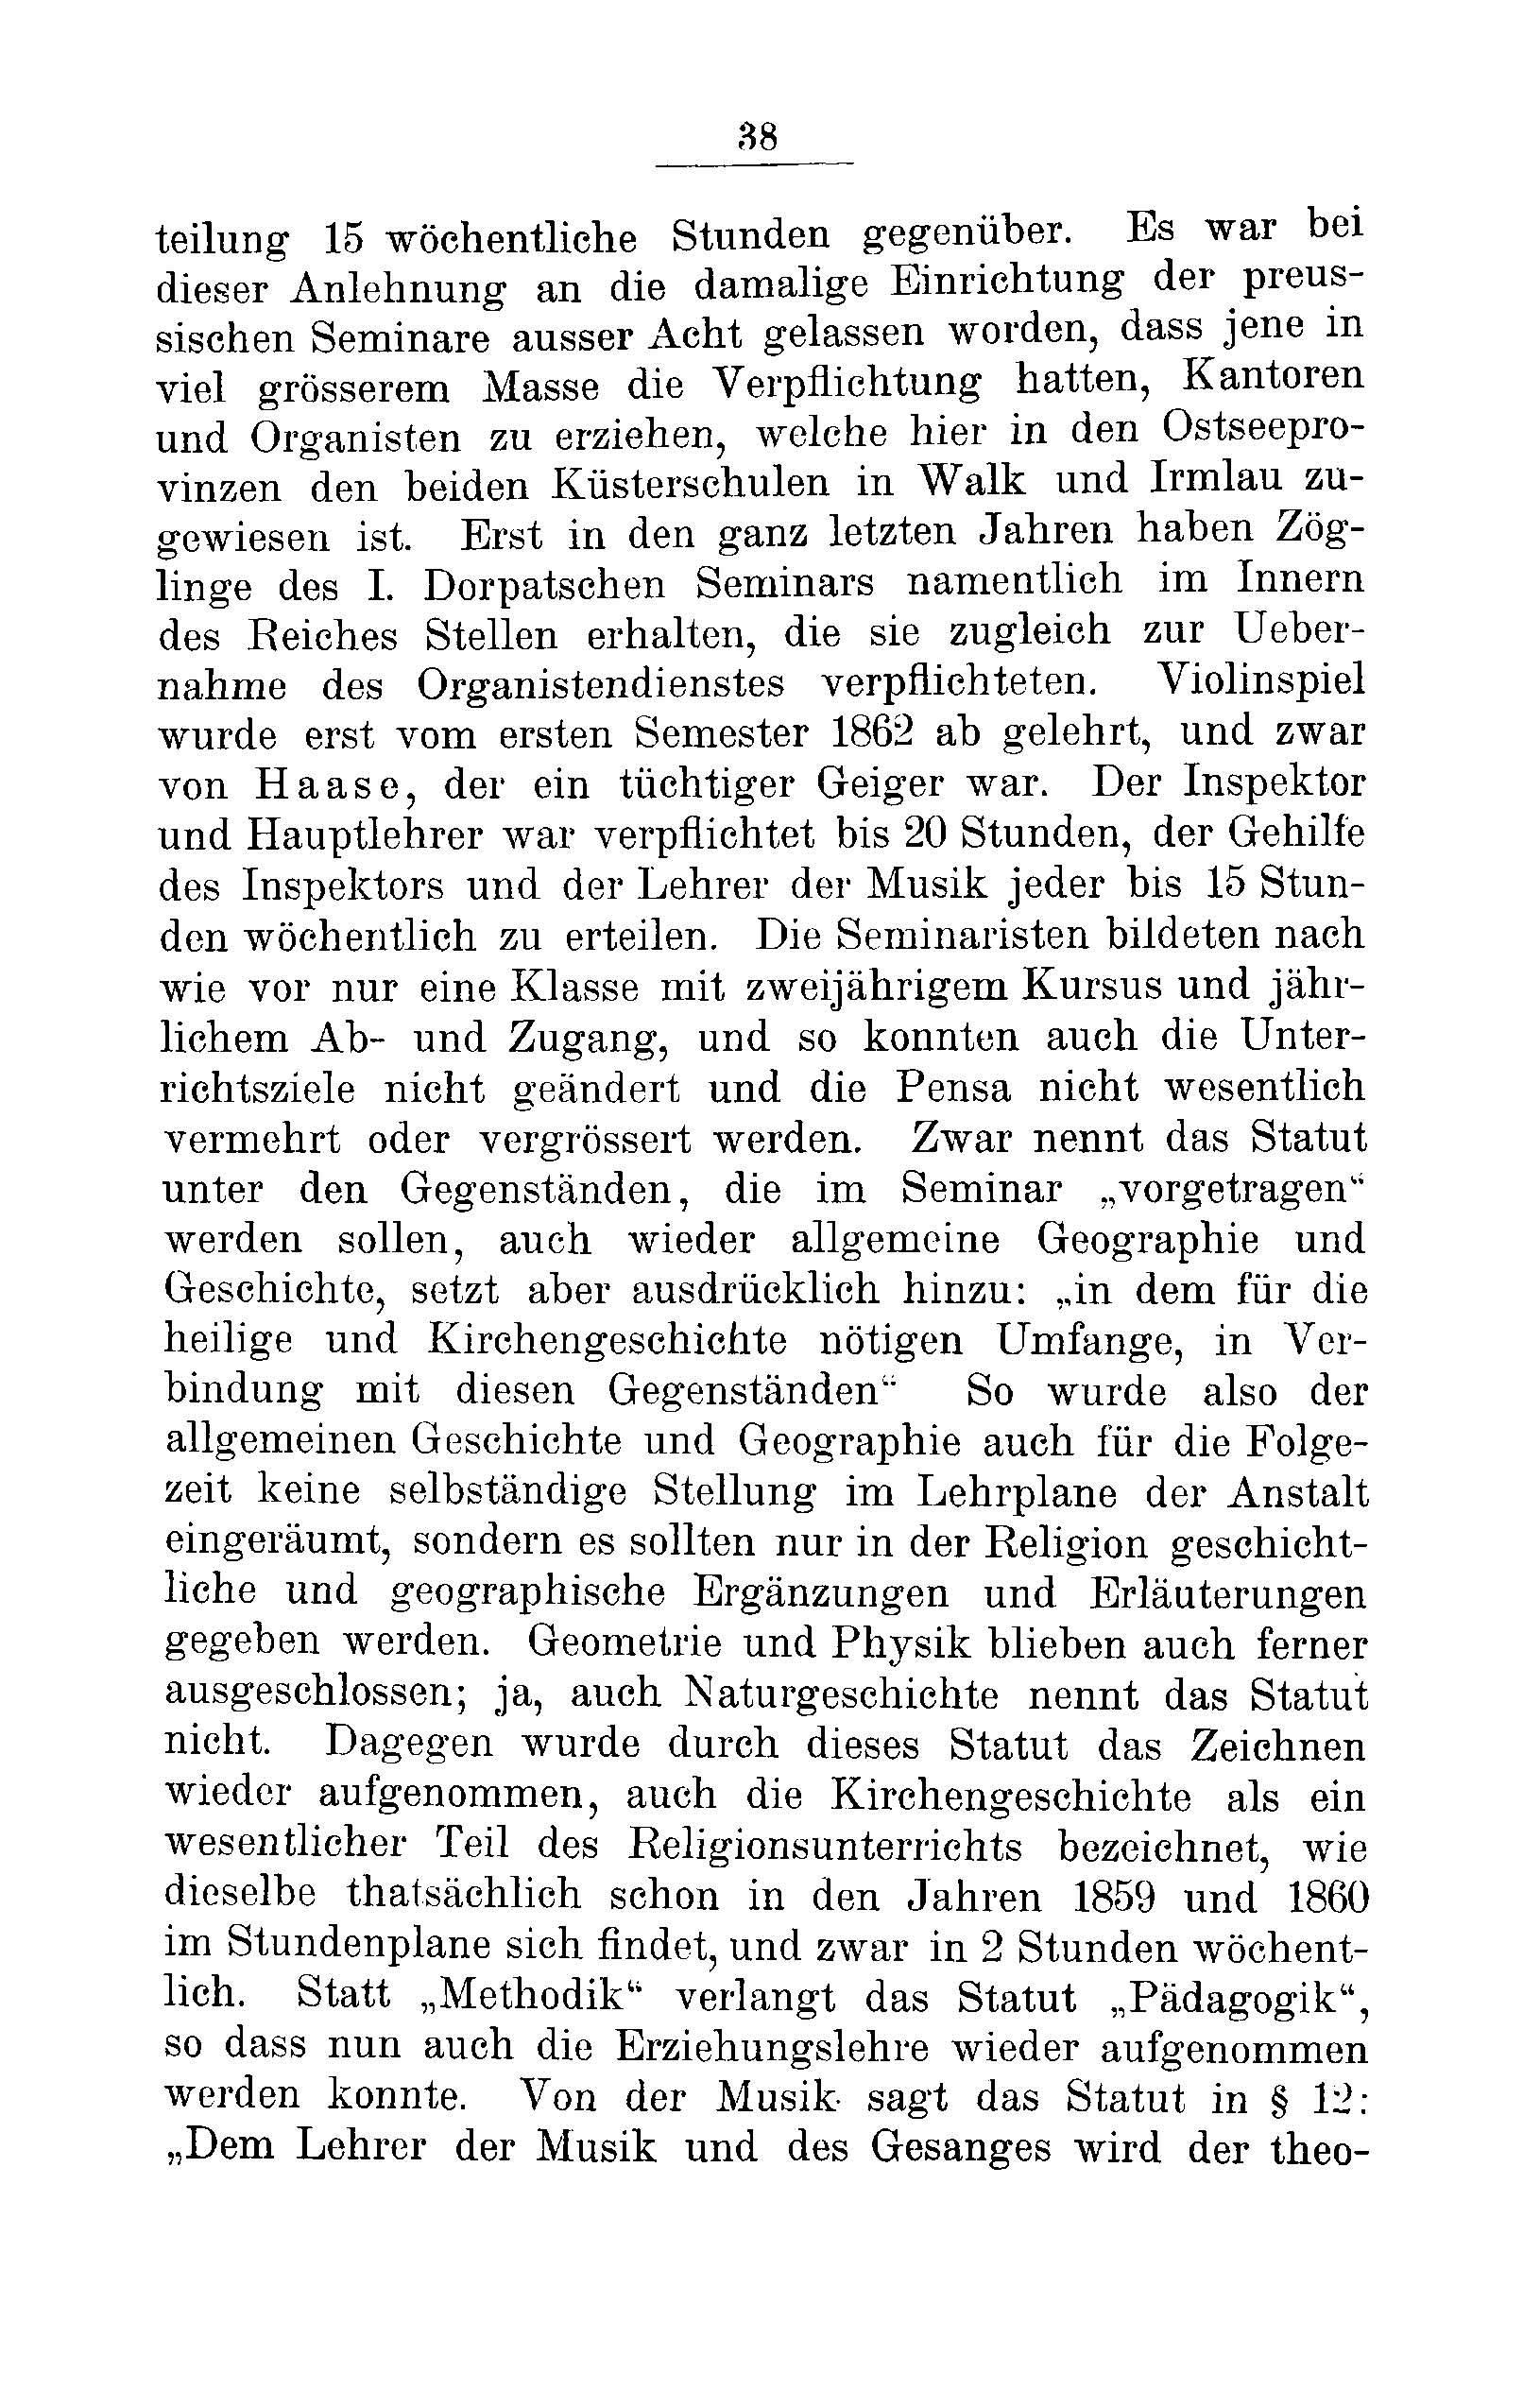 Das Erste Dorpatsche Lehrer-Seminar (1890) | 40. Основной текст